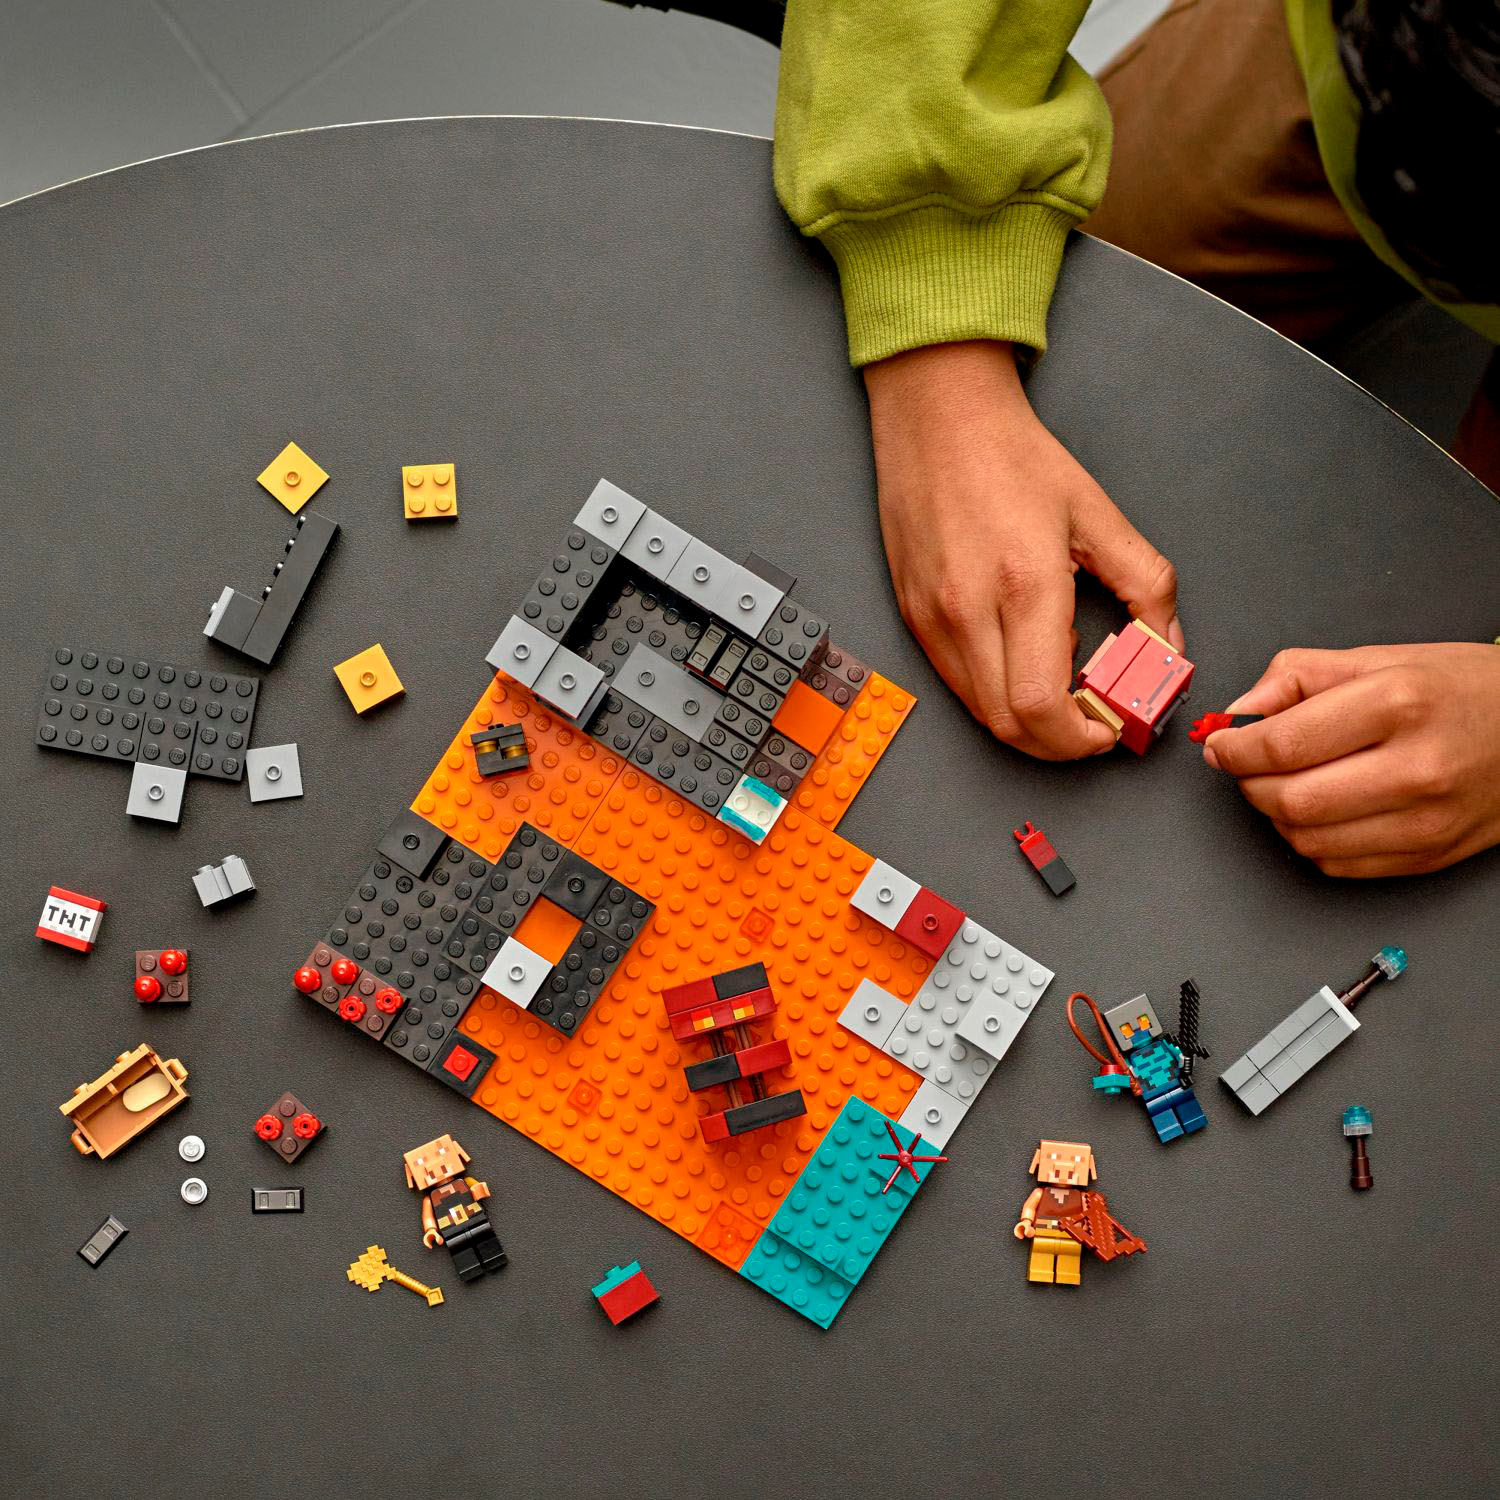 LEGO Minecraft The Nether Bastion 21185 6379574 - Best Buy